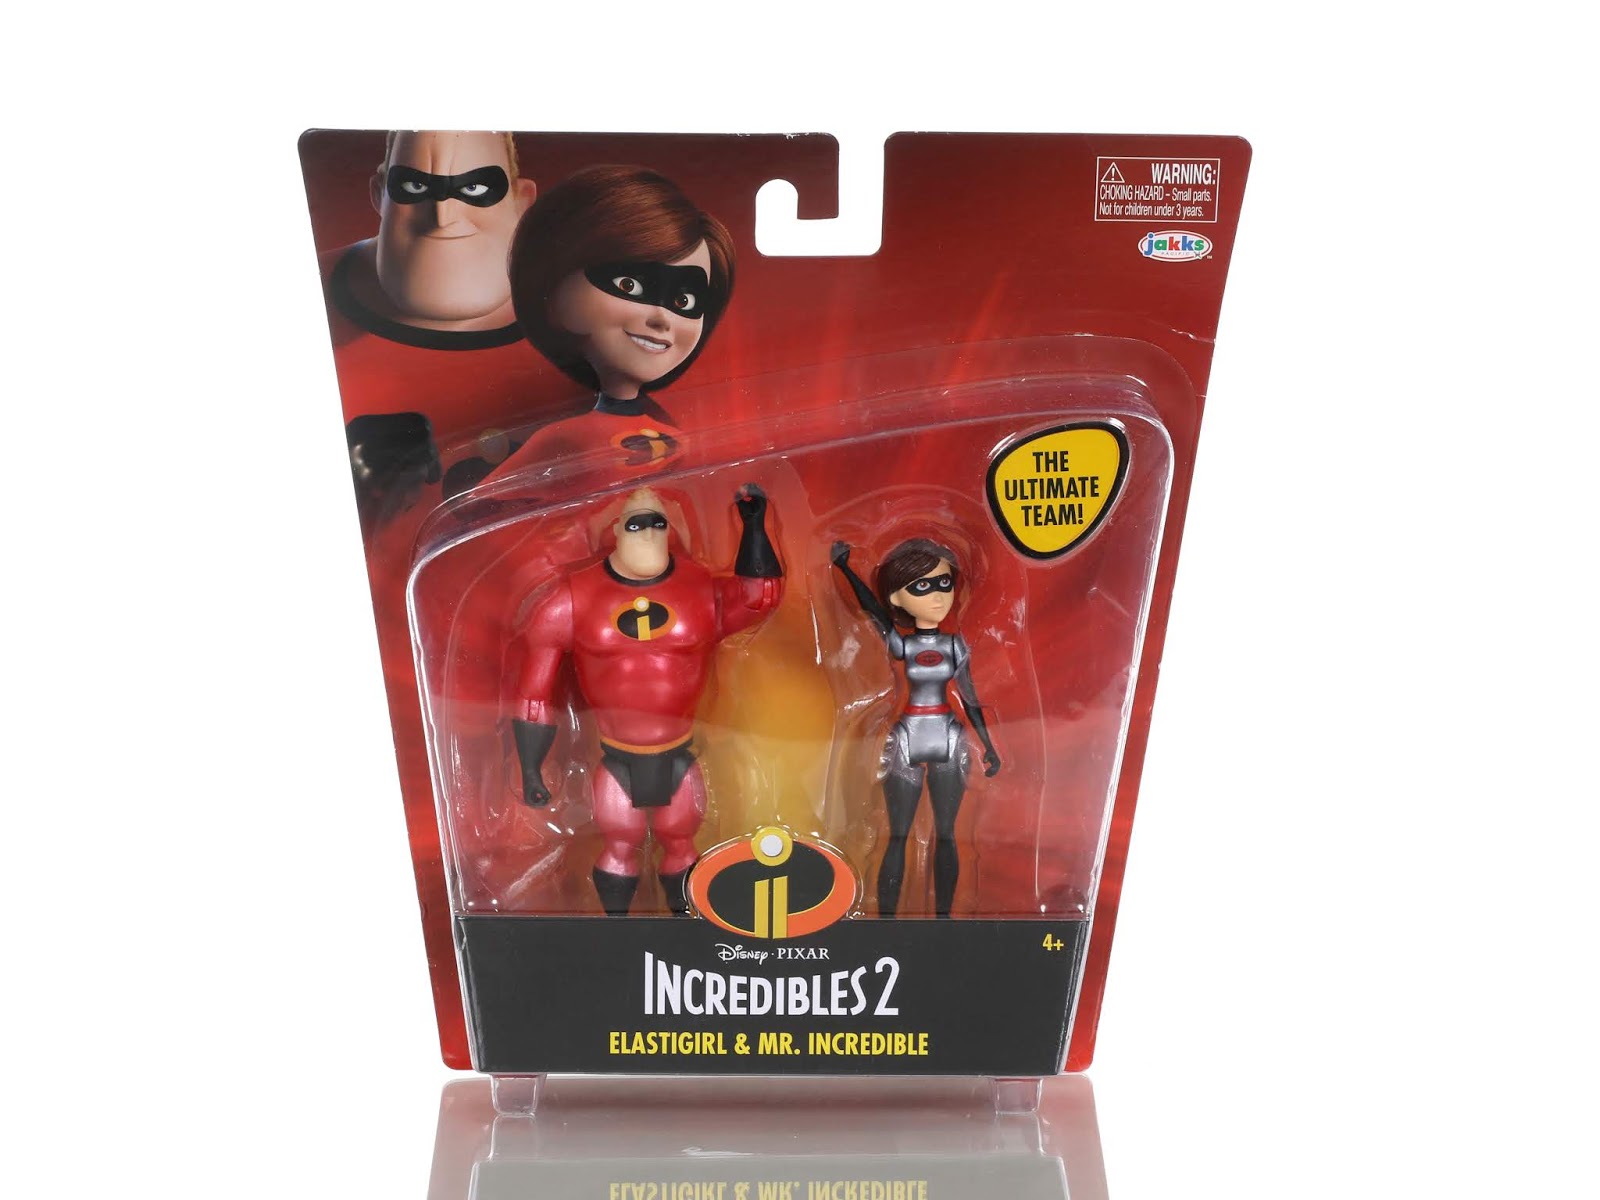 Incredibles 2 Jakks Pacific 4" Action Figure Collection Review